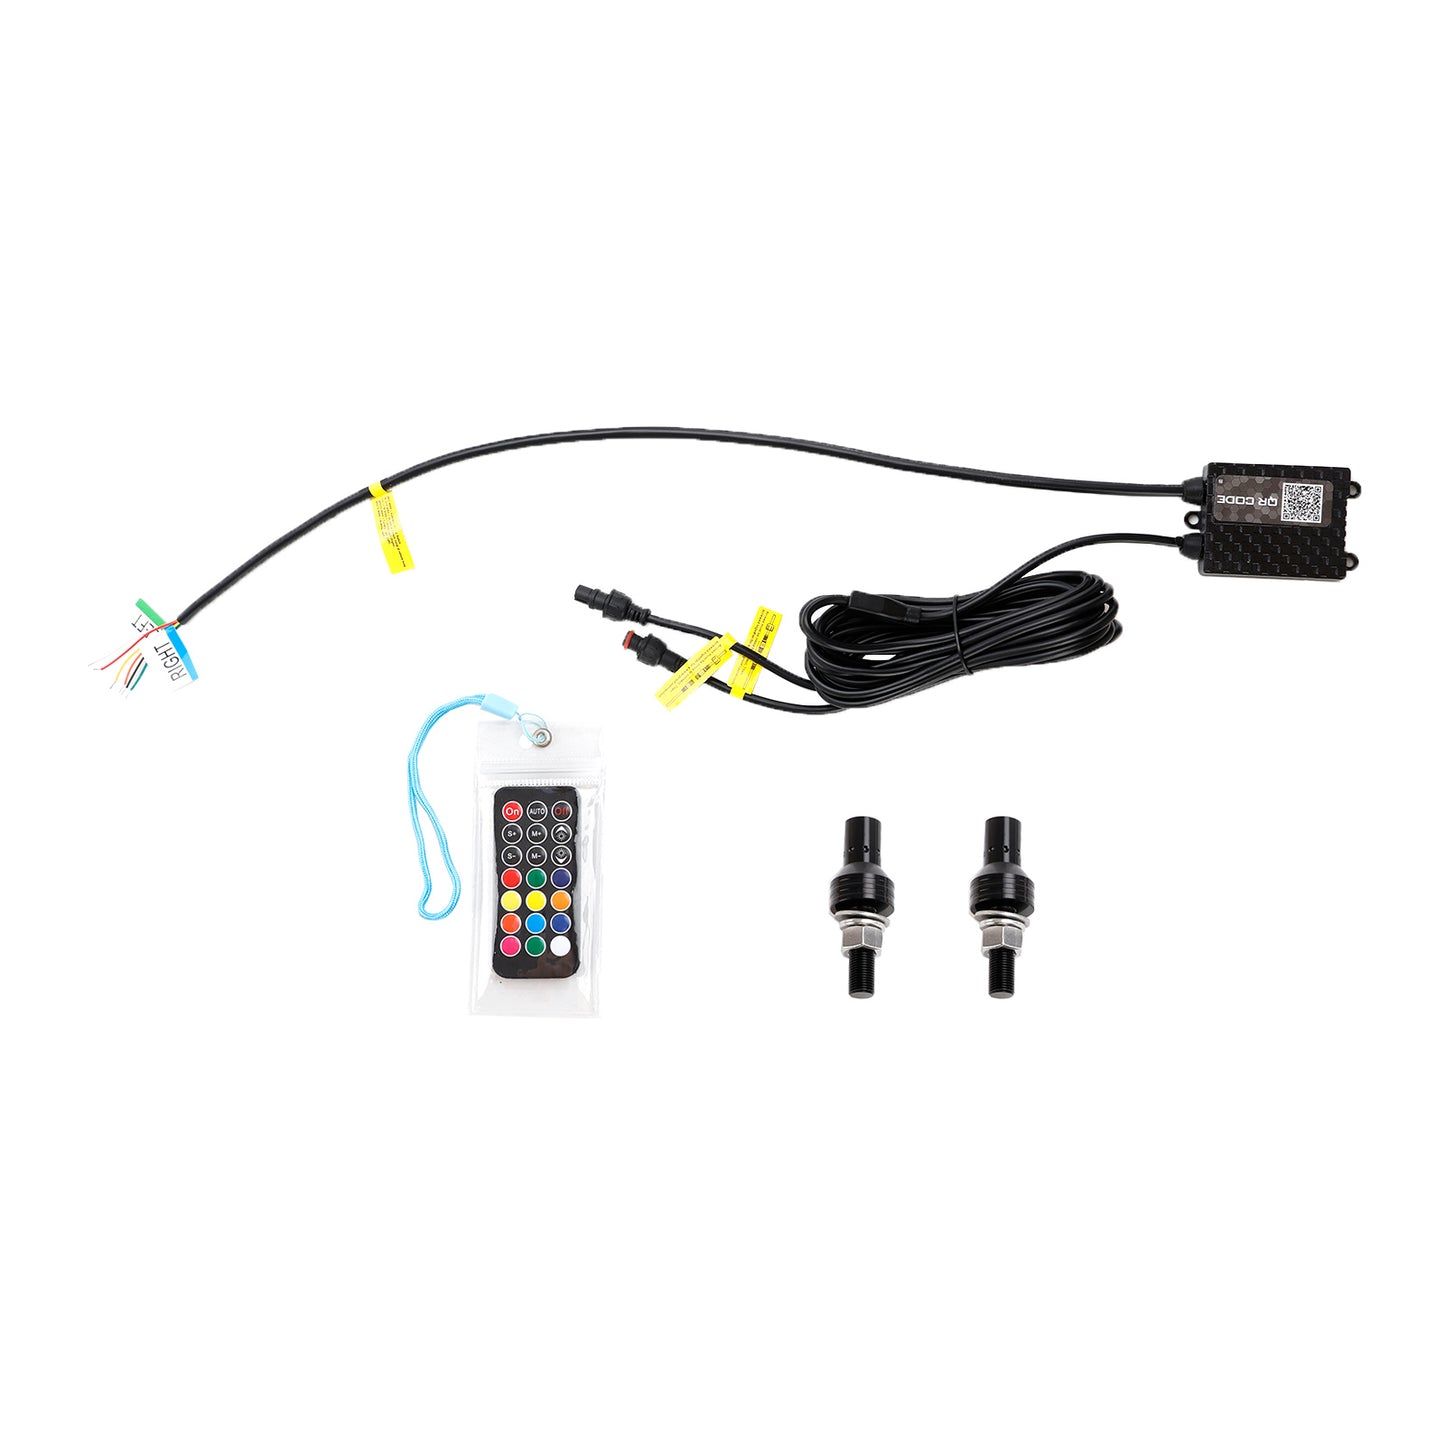 2X RGB 3ft LED Whip Lights Antenna W/ Flag Remote Control For Polaris RZR UTV ATV